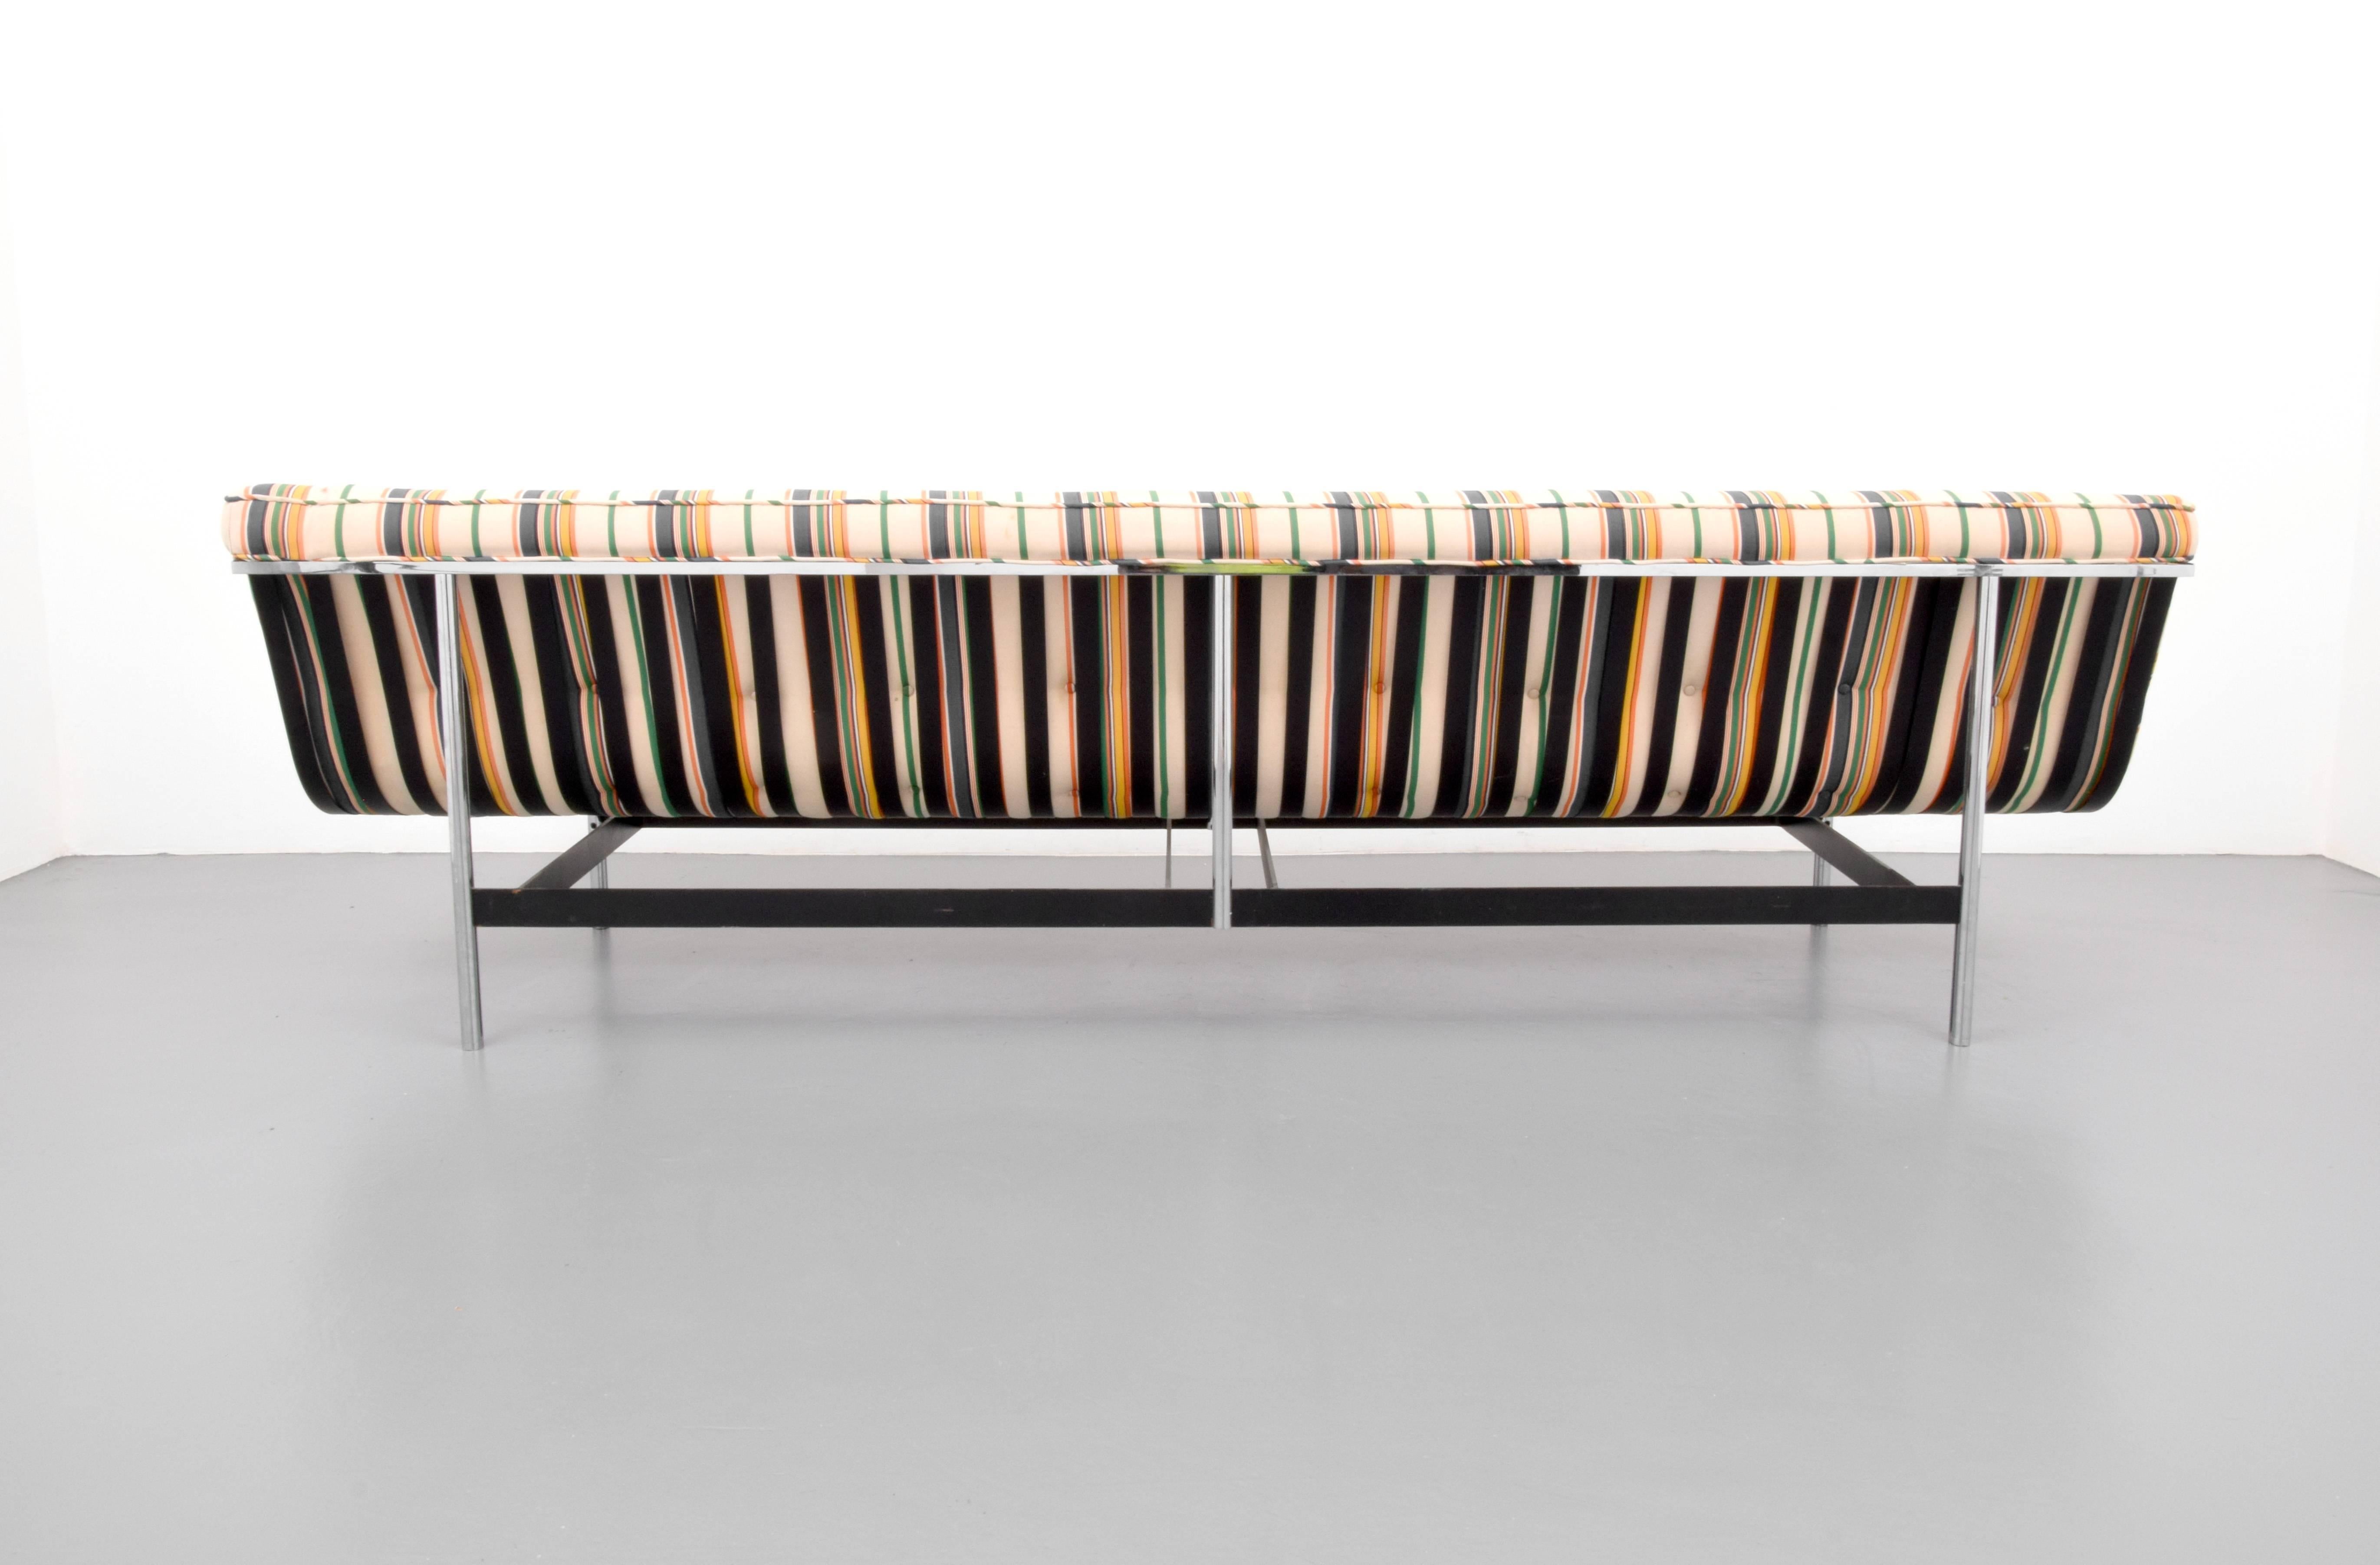 Long "New York" sofa, model #8-FC, by William Katavolos, Ross Littell & Douglas Kelley for Laverne International. Reference: Laverne International Manufacturer Catalog, unpaginated.